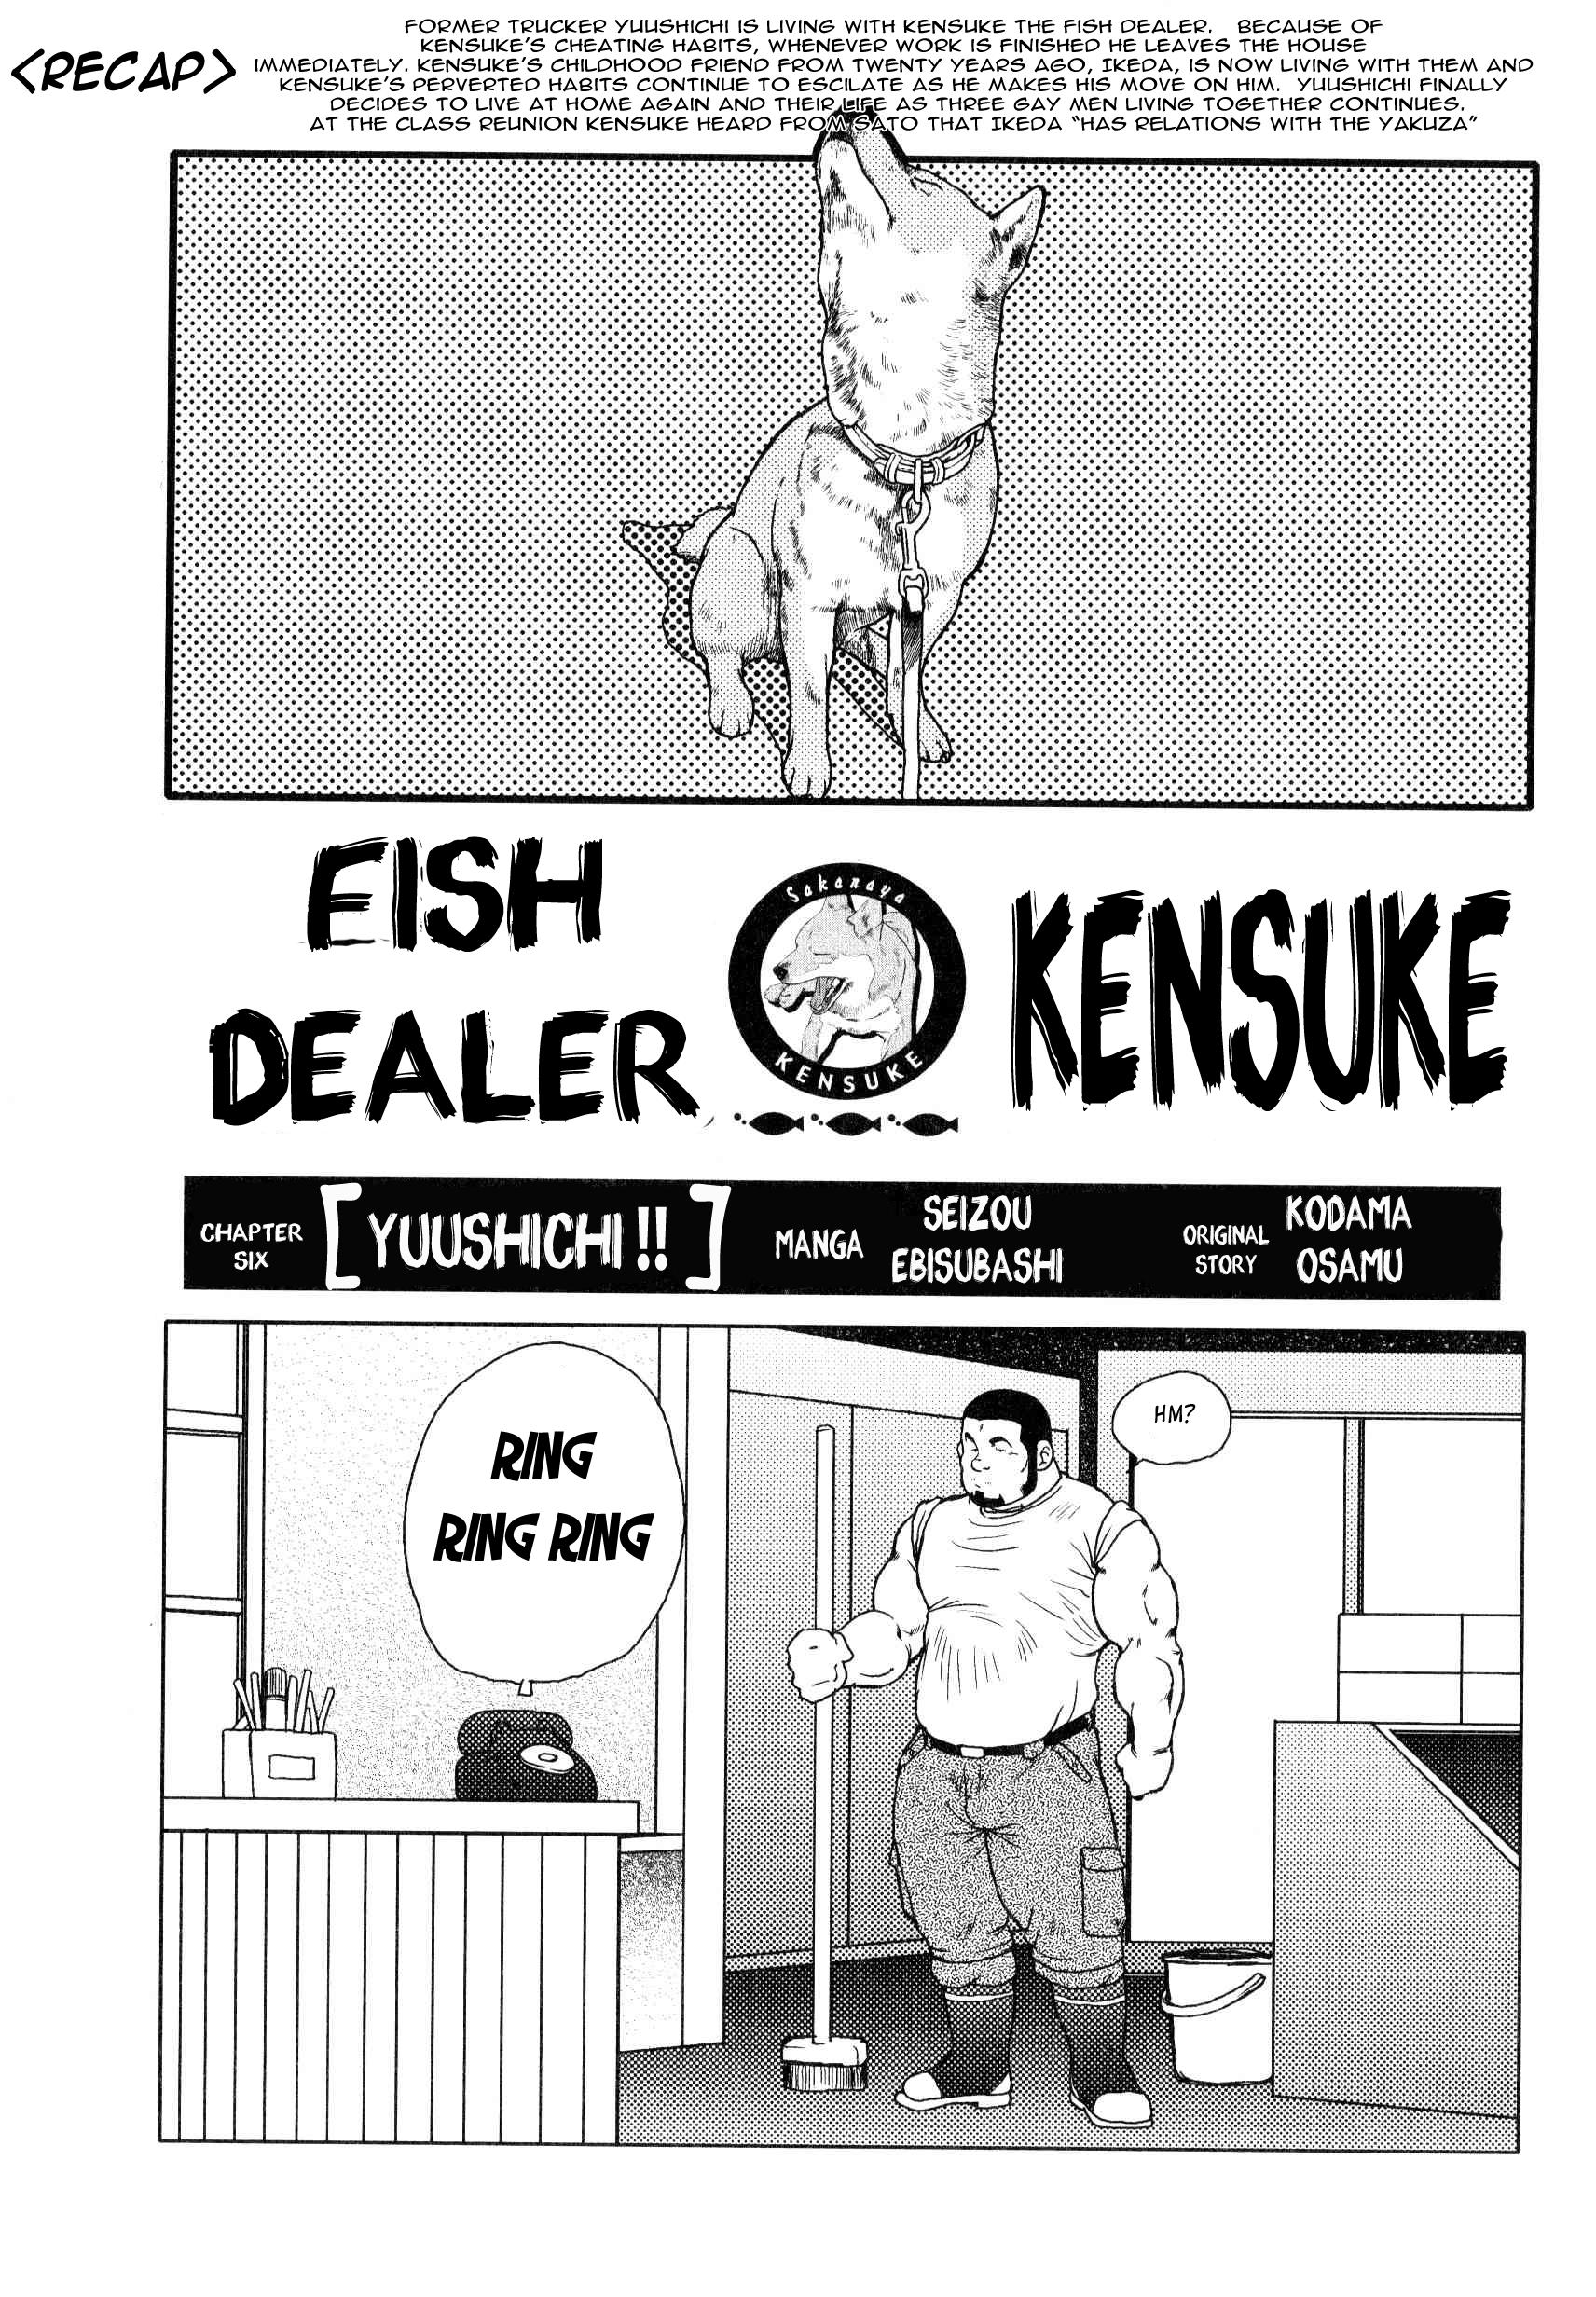 Fish Dealer Kensuke 140